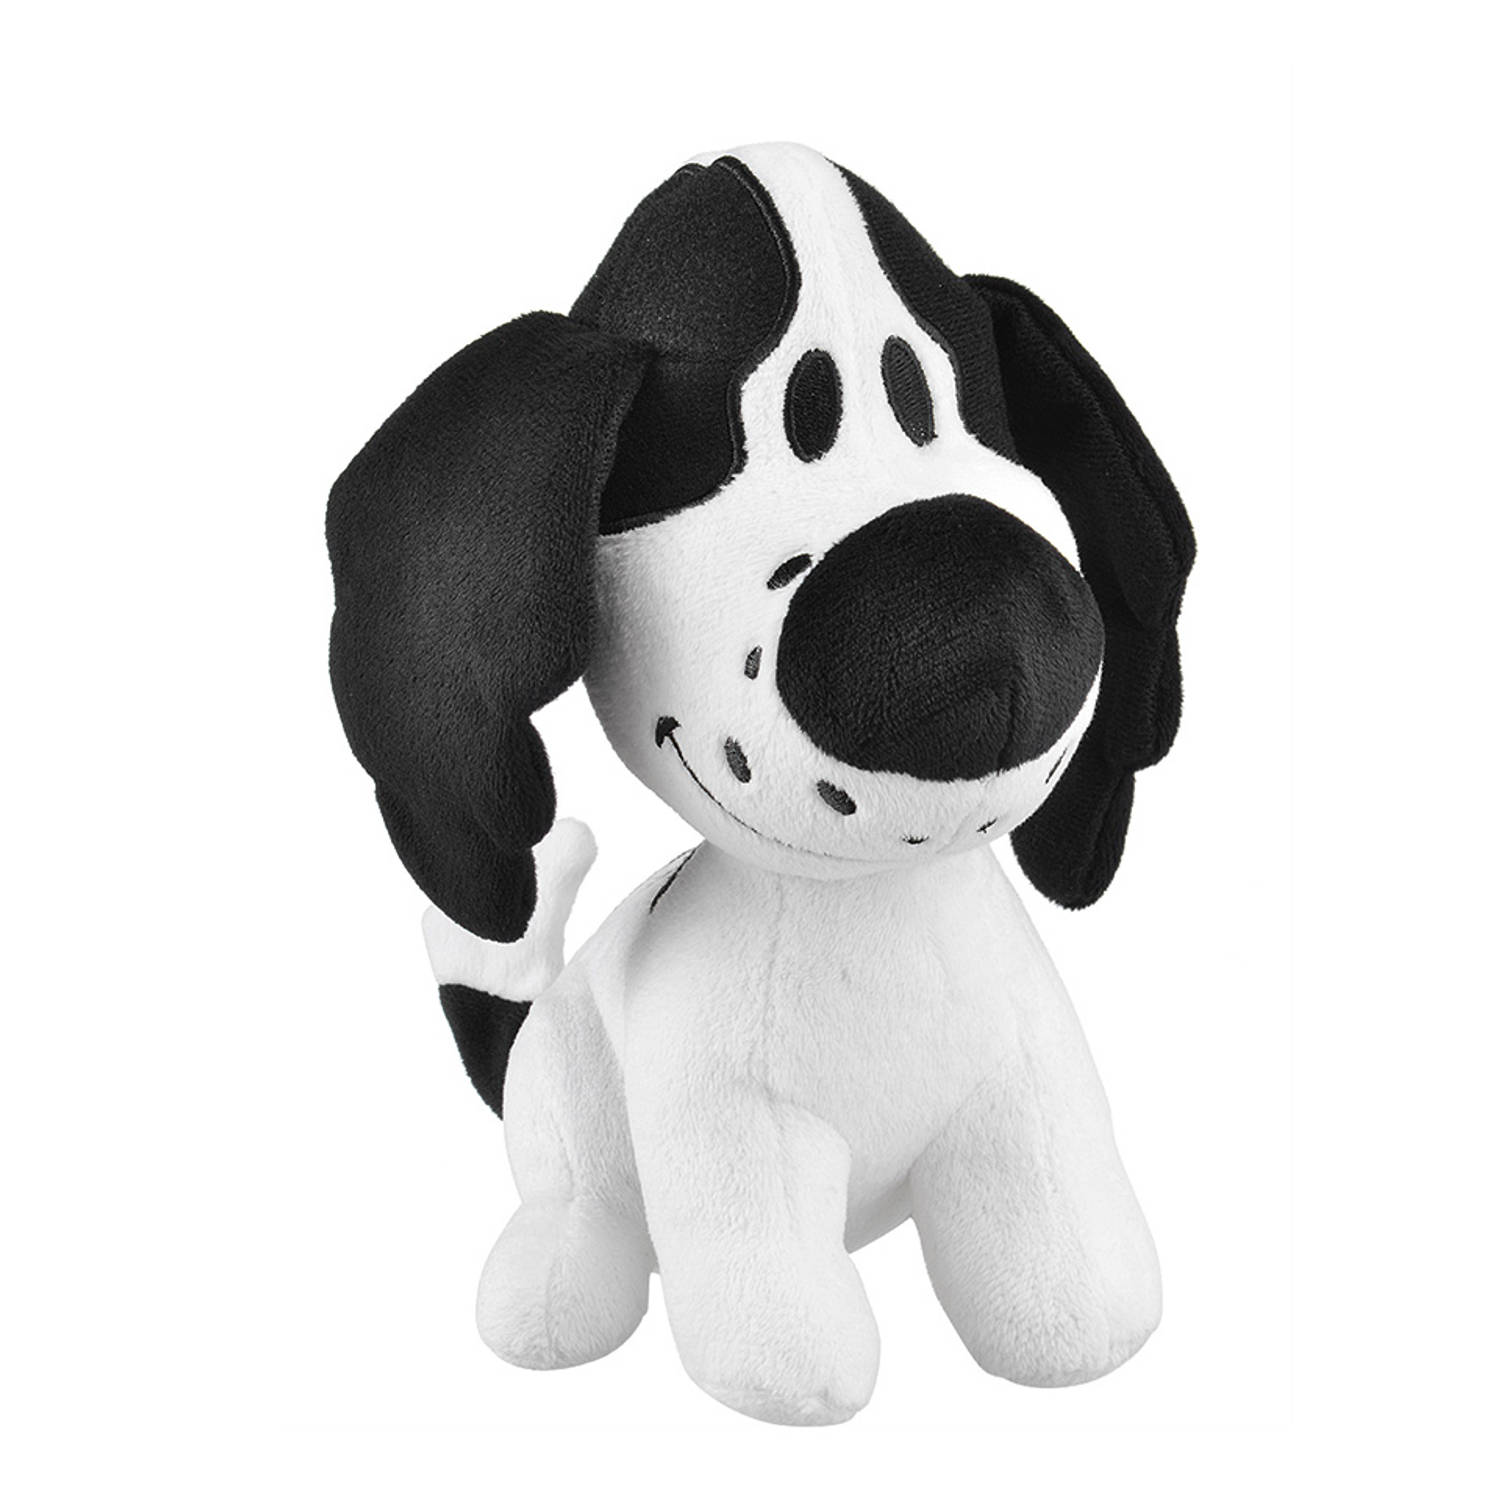 gebruiker Berucht Hulpeloosheid Woezel & Pip hondje Charlie - 10 cm | Blokker